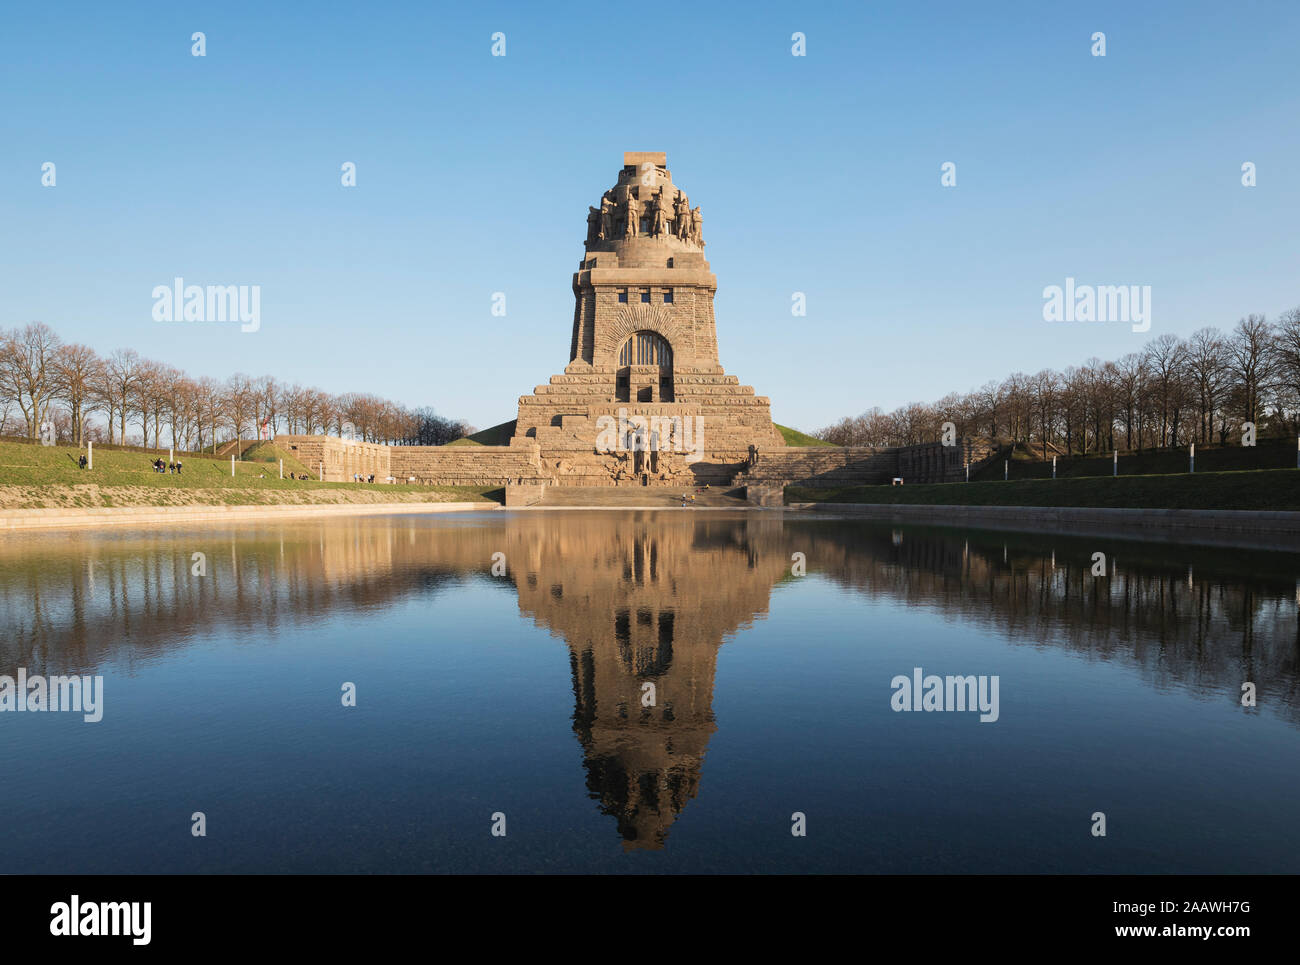 Lake of tears with reflection of Völkerschlachtdenkmal against clear blue sky, Saxony, Germany Stock Photo